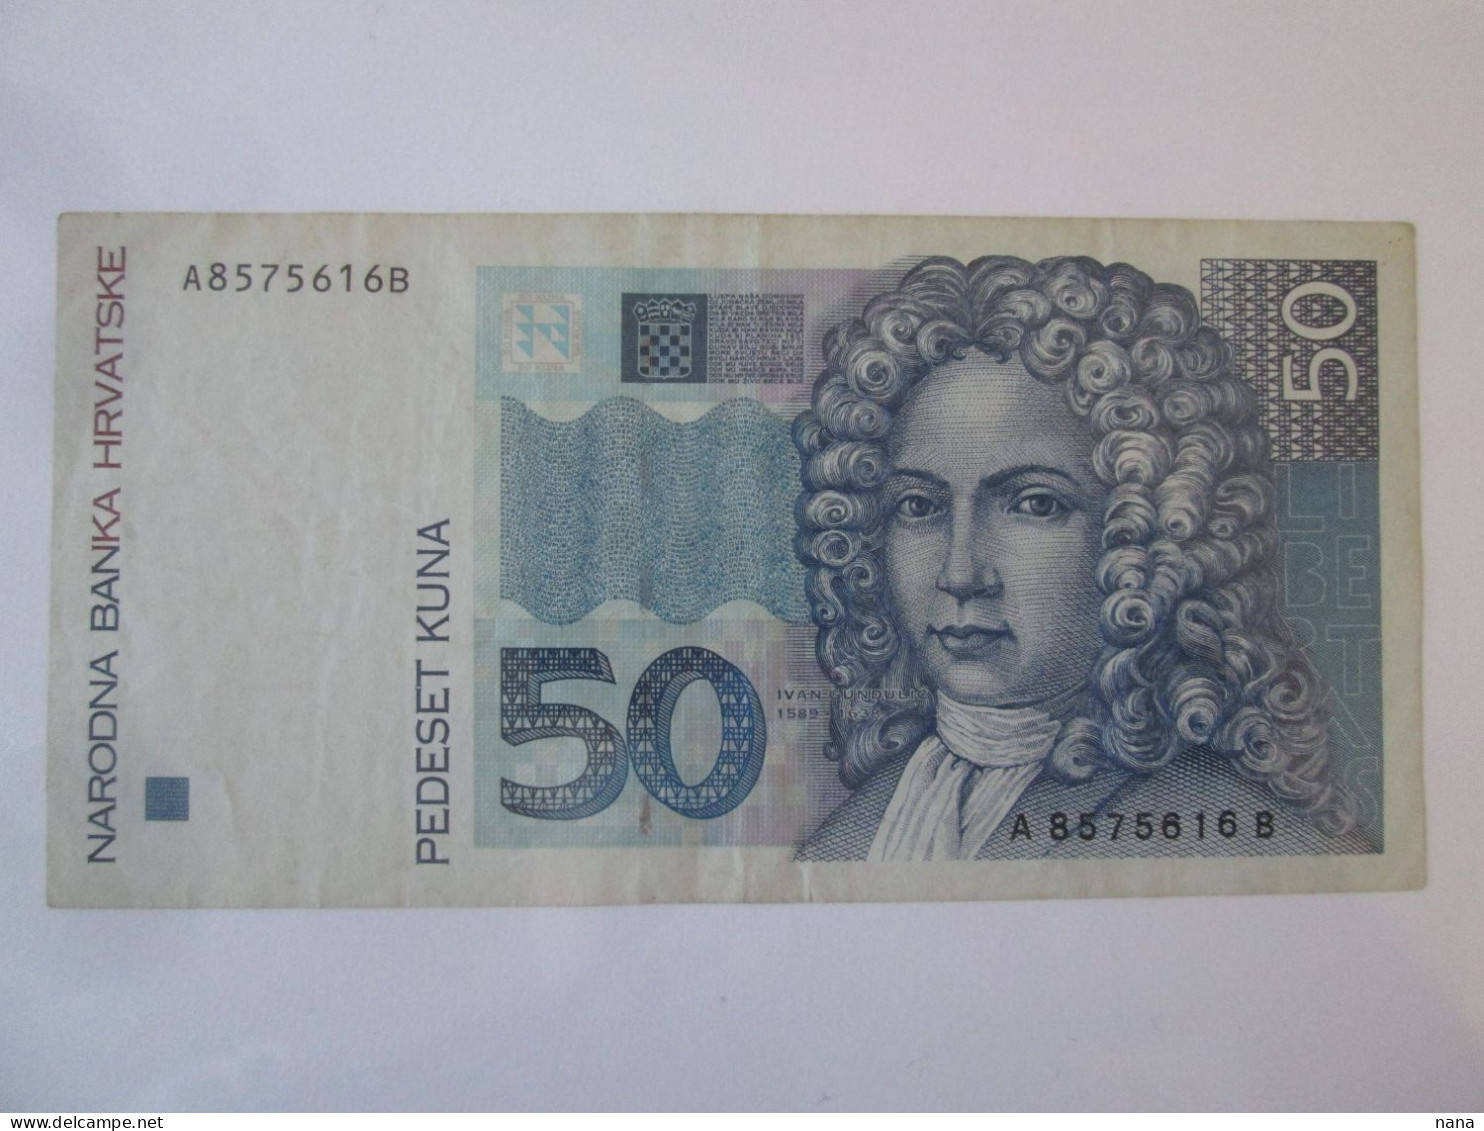 Croatia 50 Kuna 1993 Banknote - Kroatien